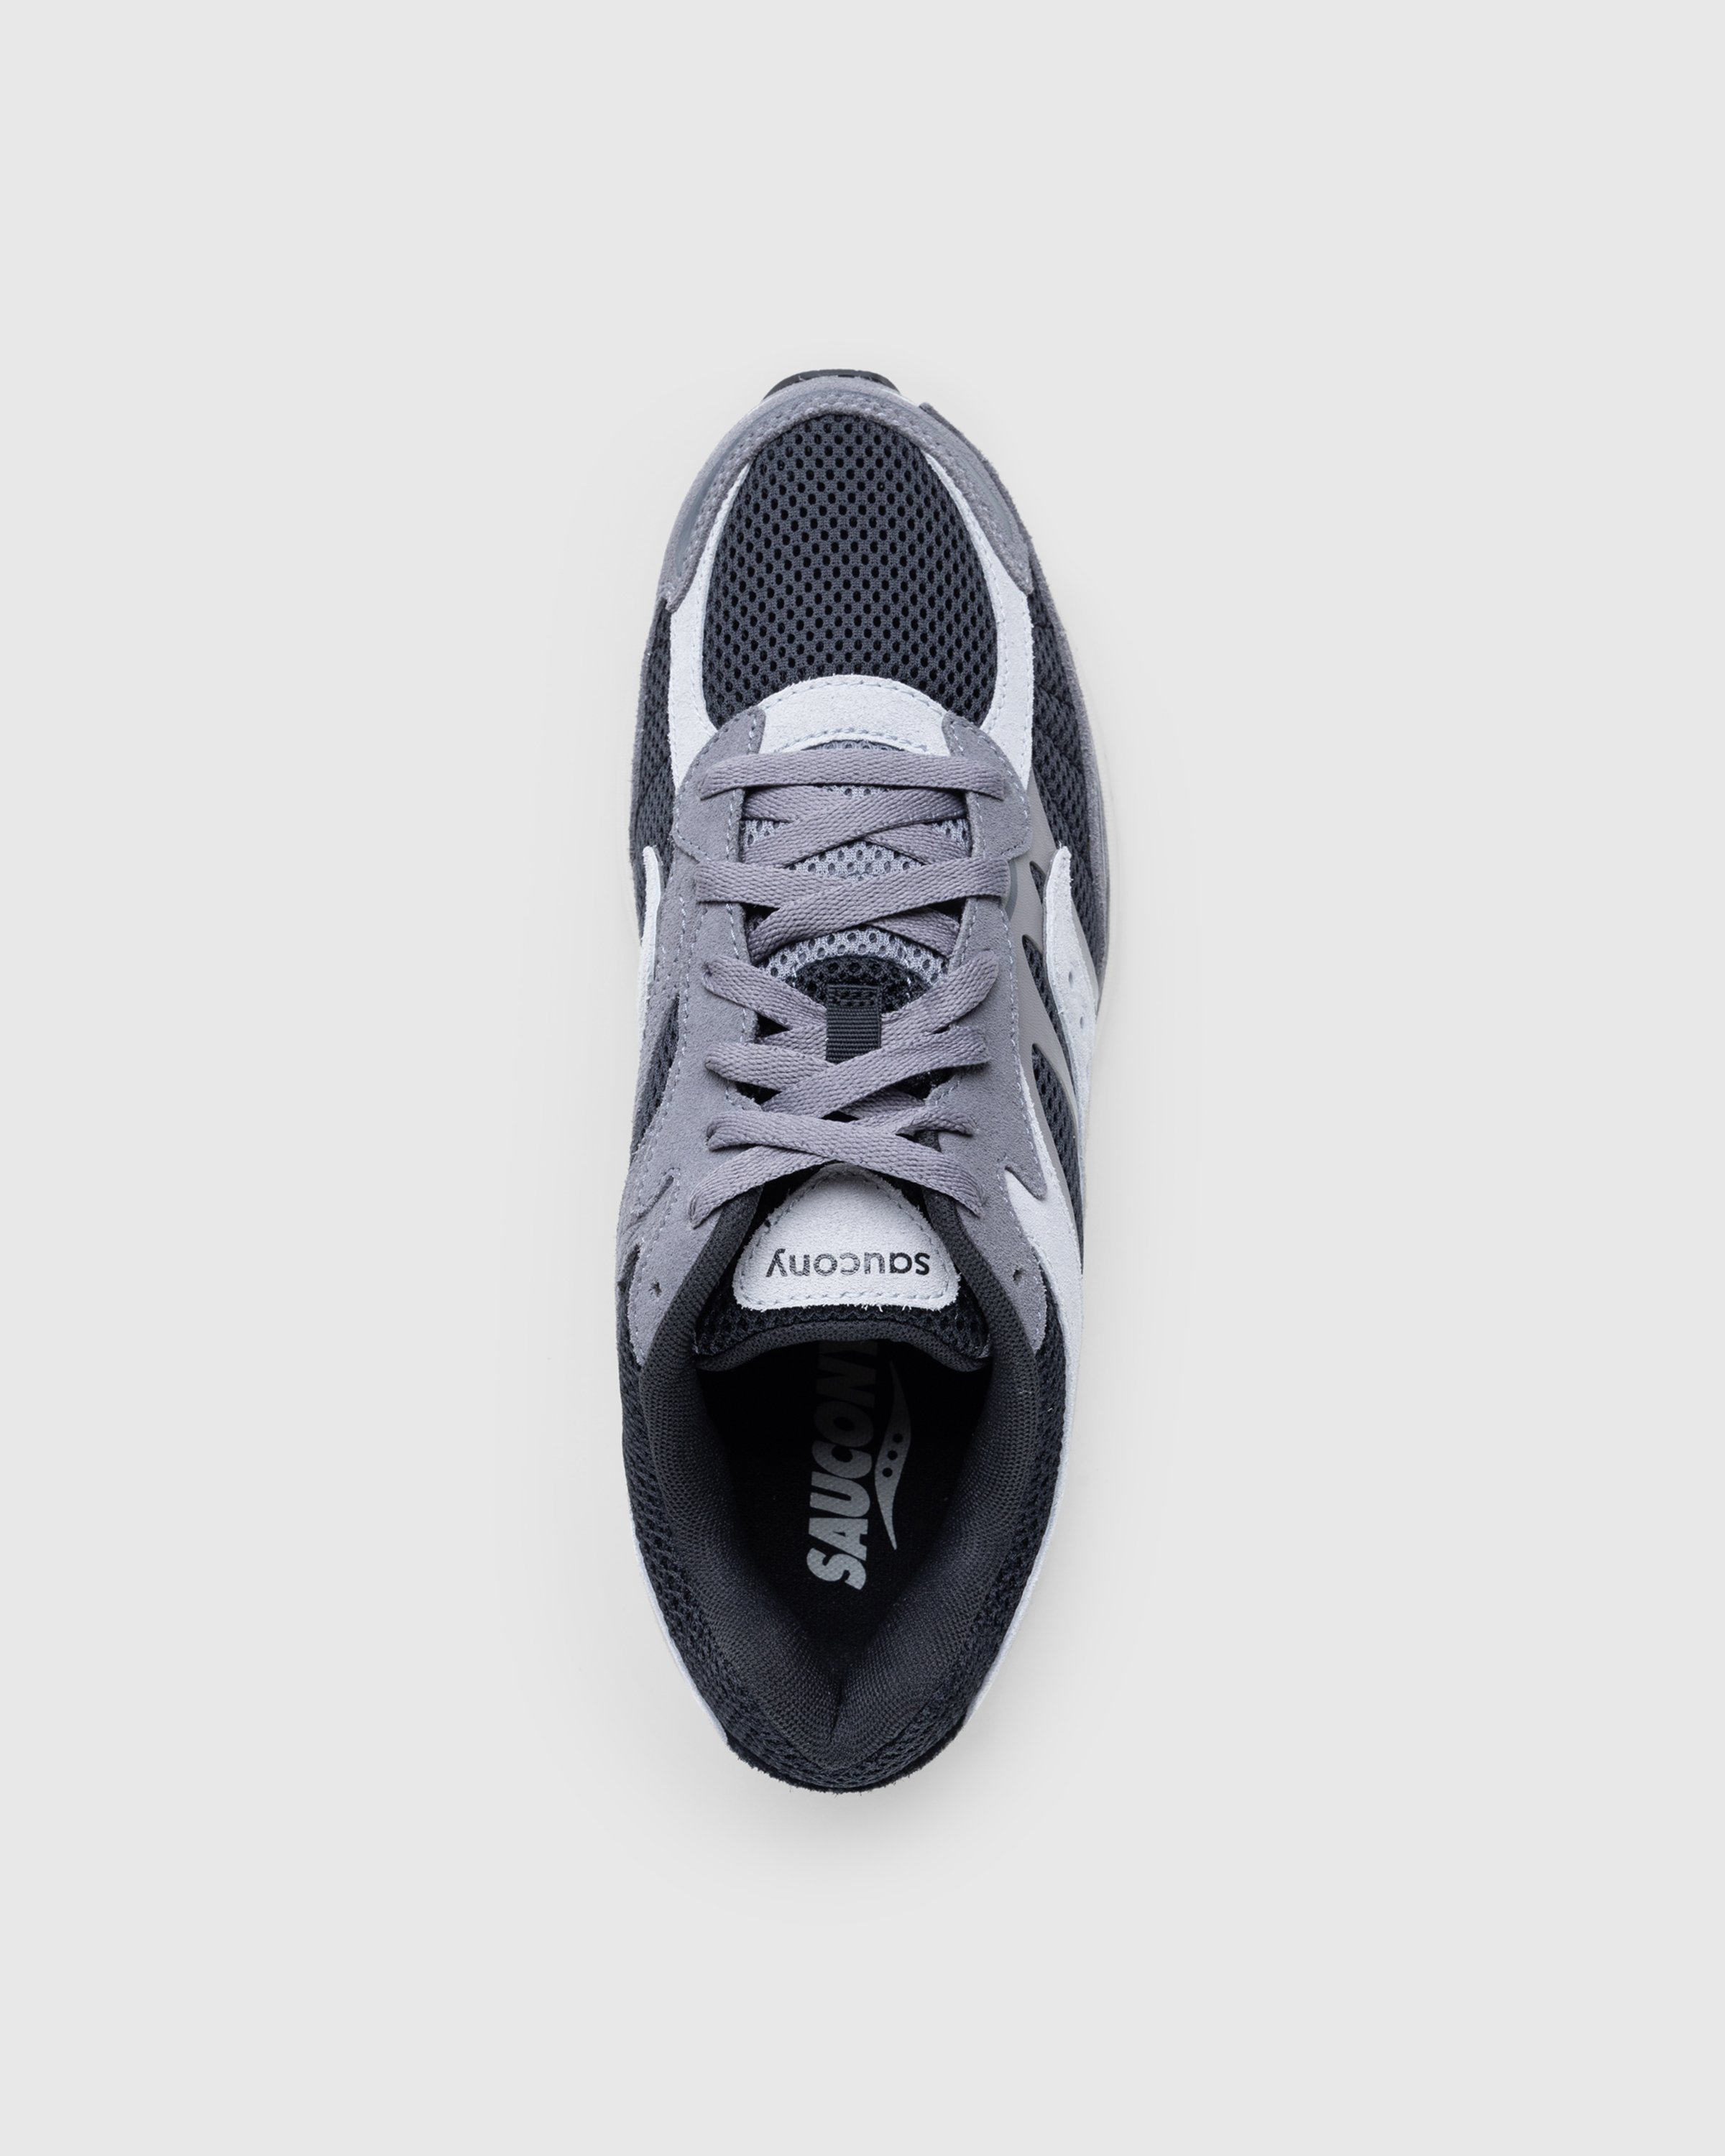 Saucony - ProGrid Omni 9 Premium Gray/Black - Footwear - Grey - Image 5